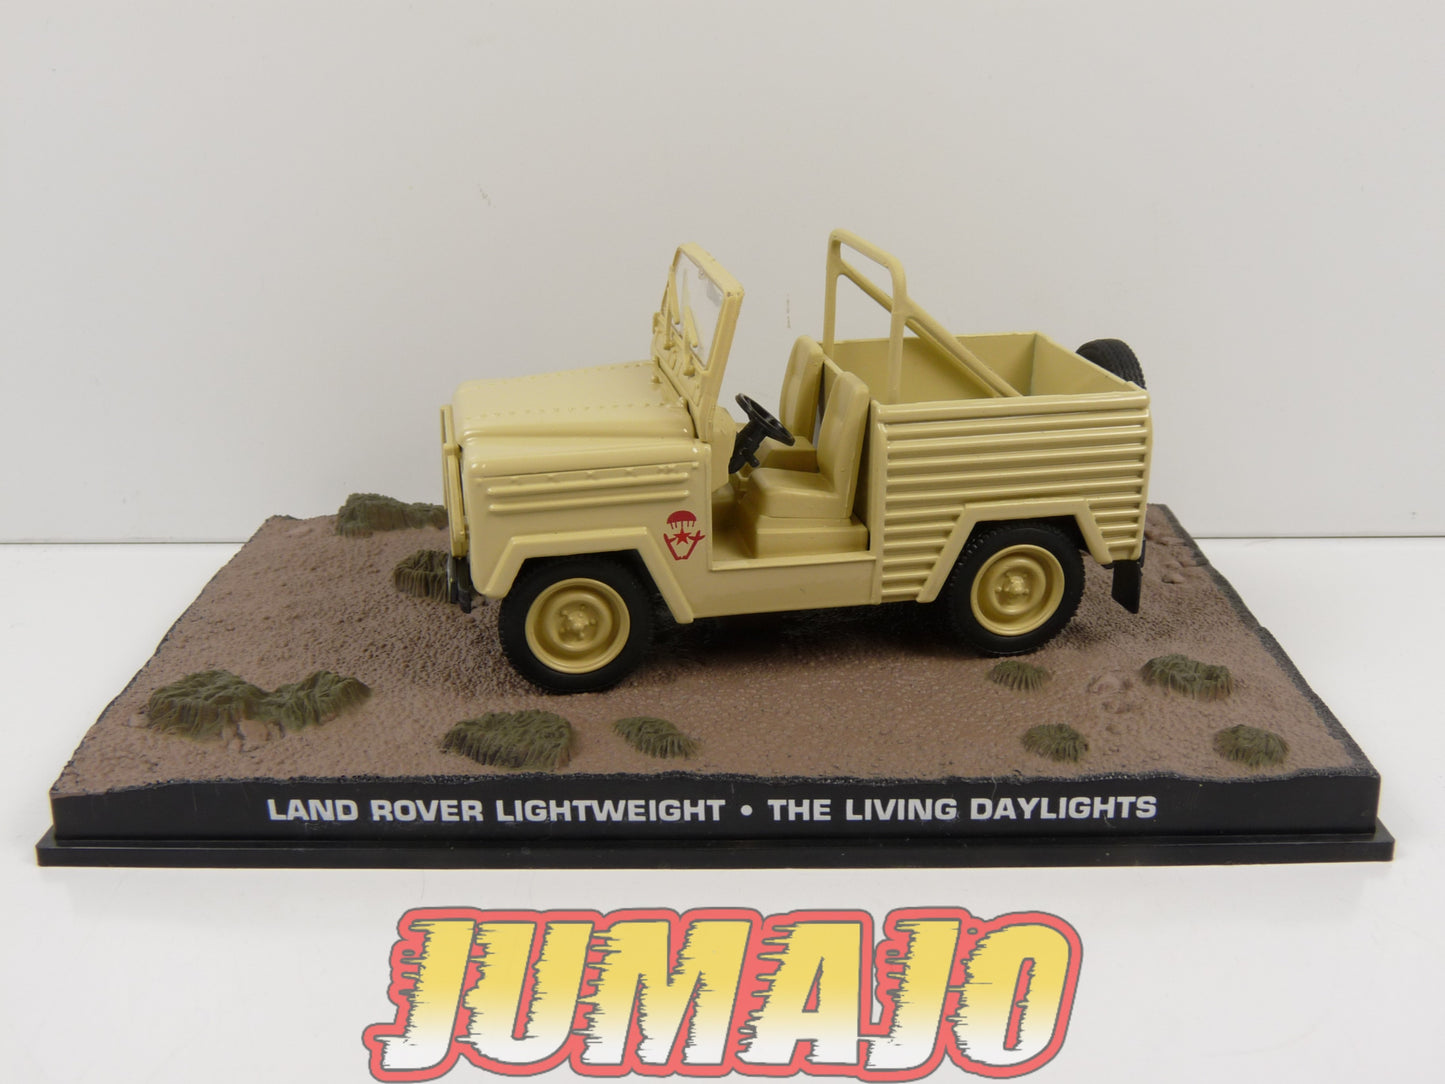 JB69 voiture 1/43 IXO altaya 007 JAMES BOND : Land Rover lightweight The living daylights (Sans personnages)